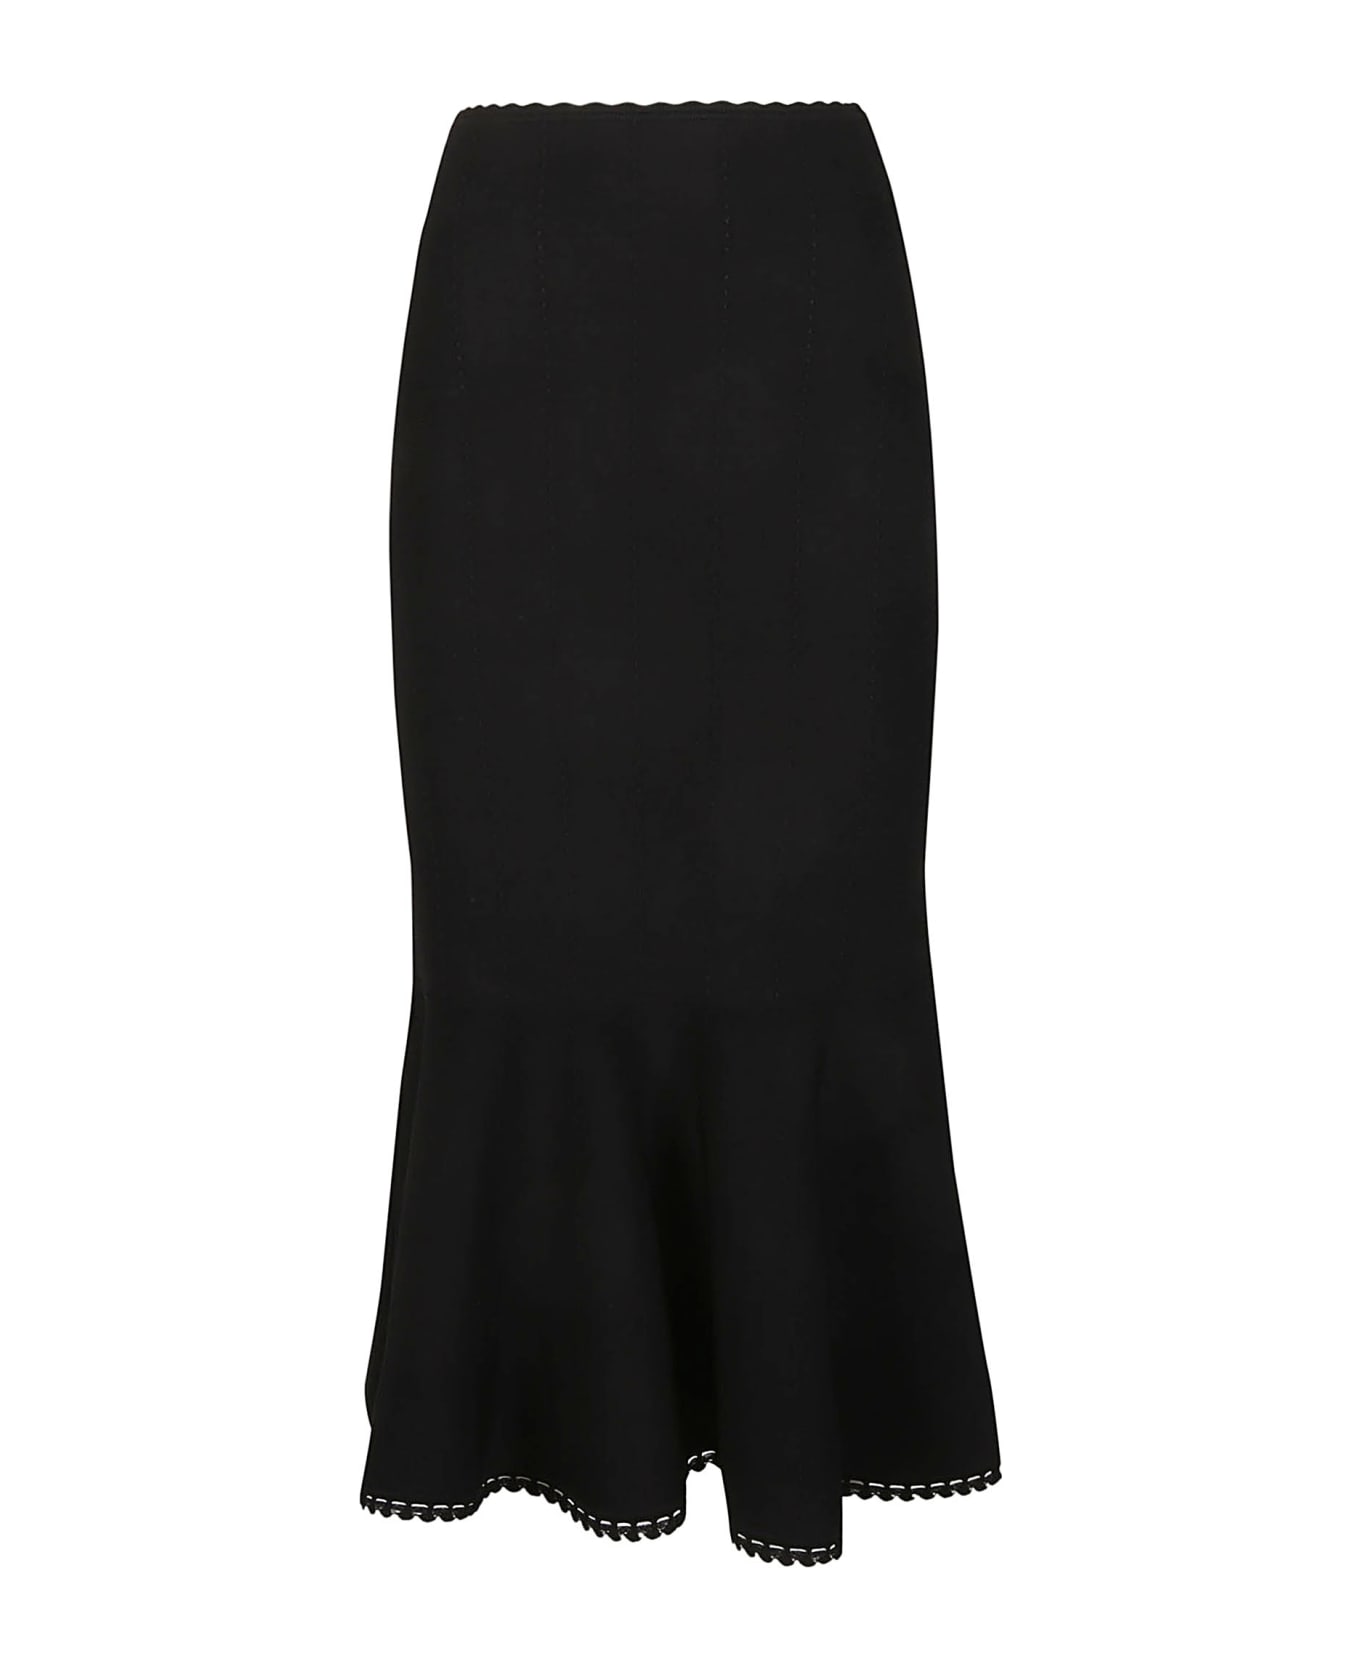 Victoria Beckham Scallop Trim Flared Skirt - Black スカート